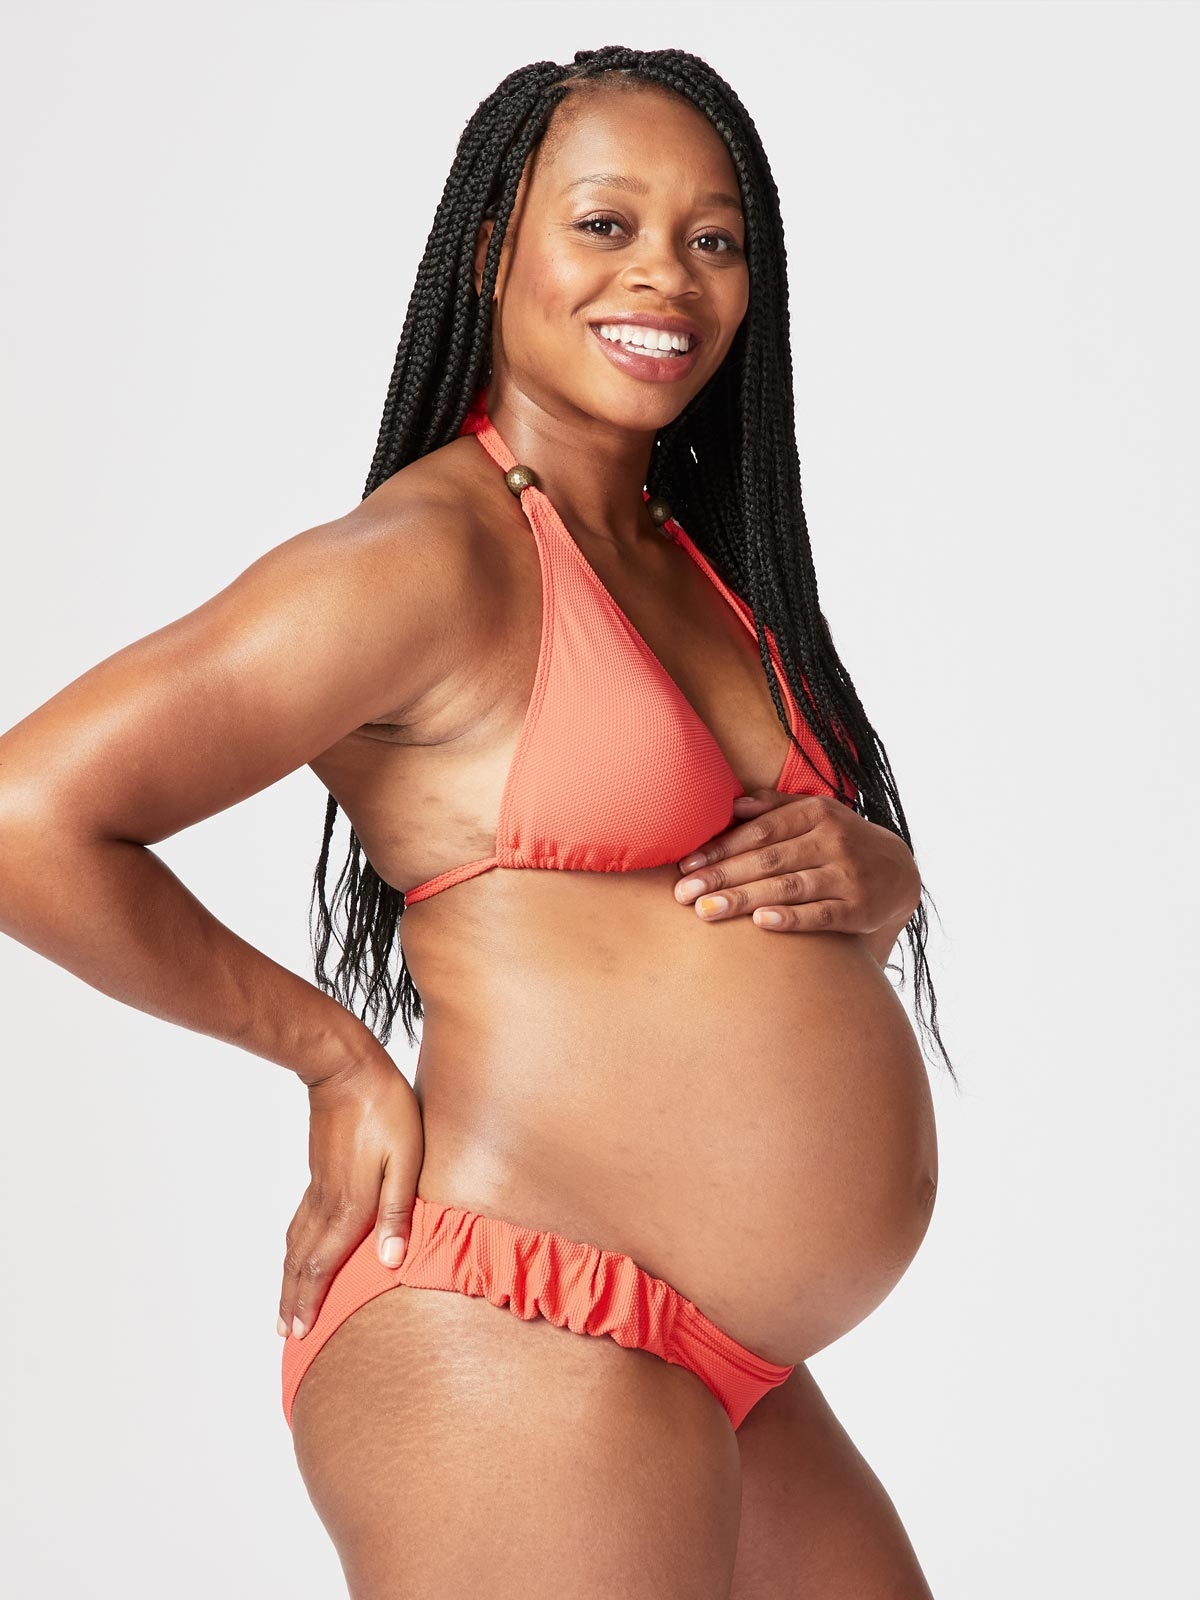 Maternity Swimwear for Pregnant Women